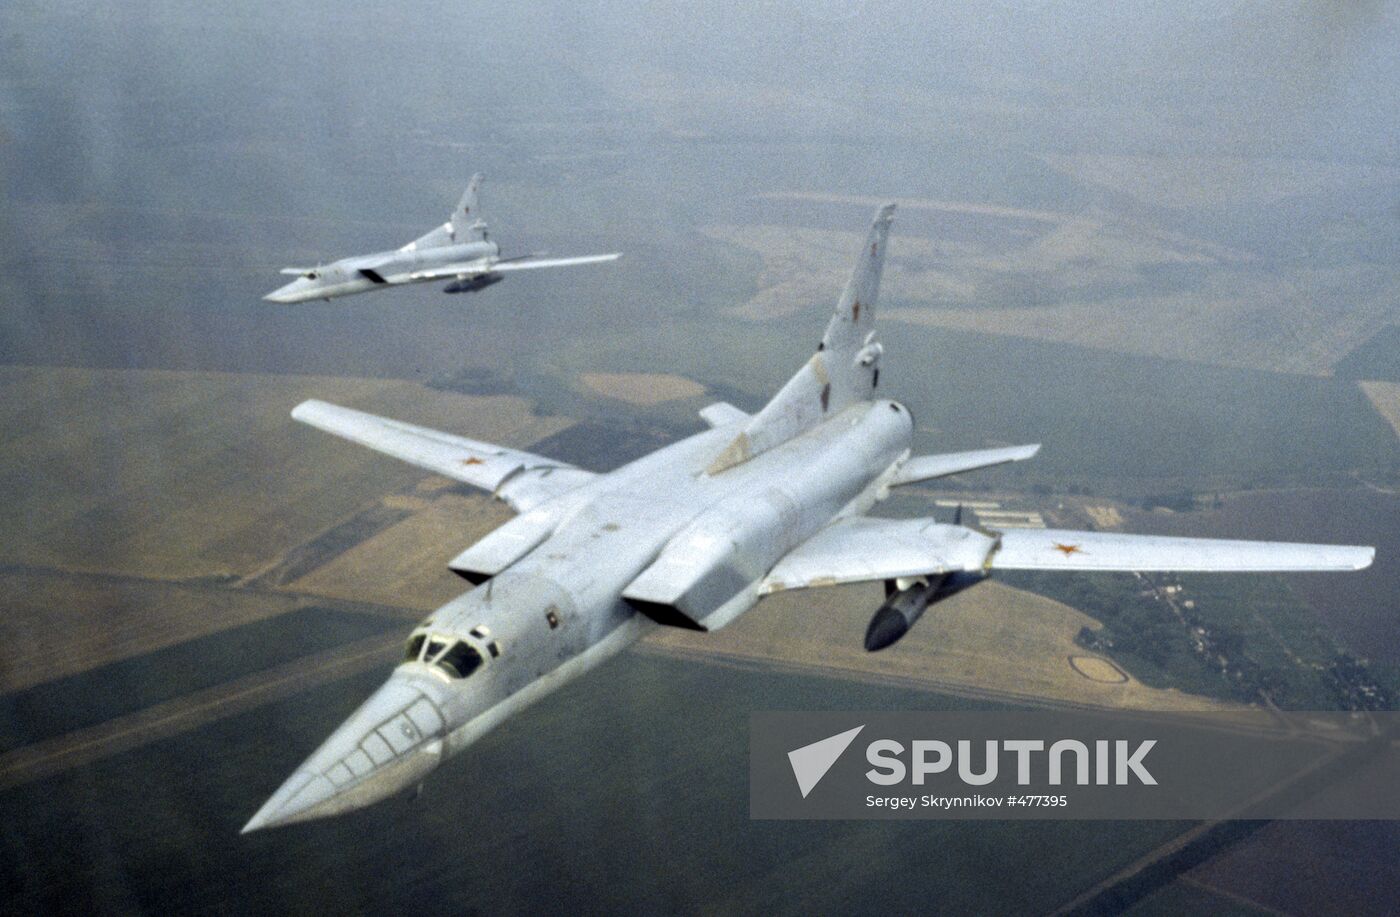 Soviet Tu-22M bombers